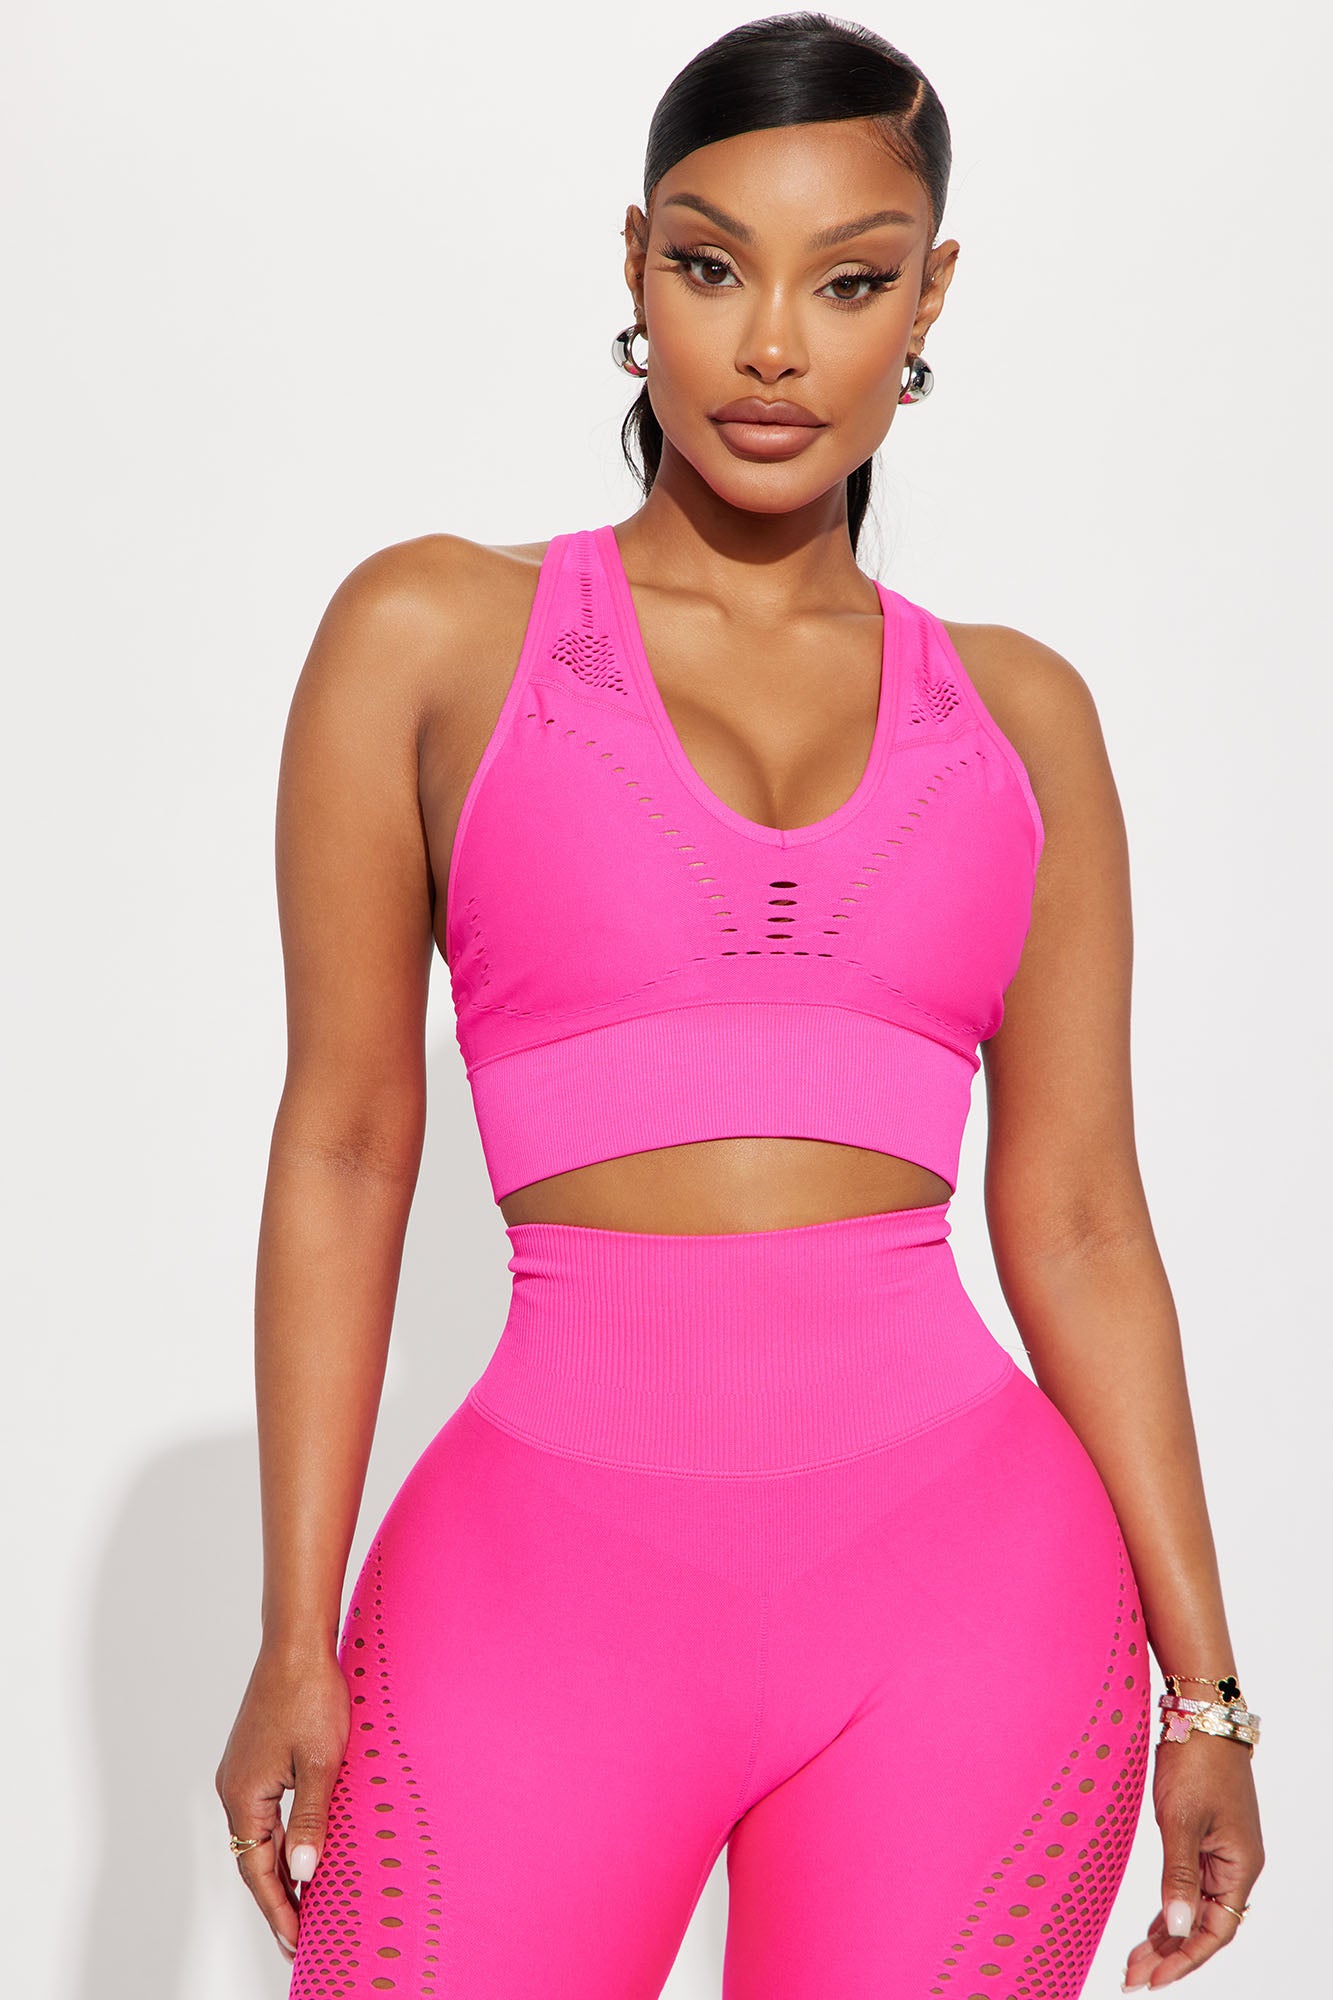 Perfect Form Sports Bra - Pink, Fashion Nova, Nova Sport Tops